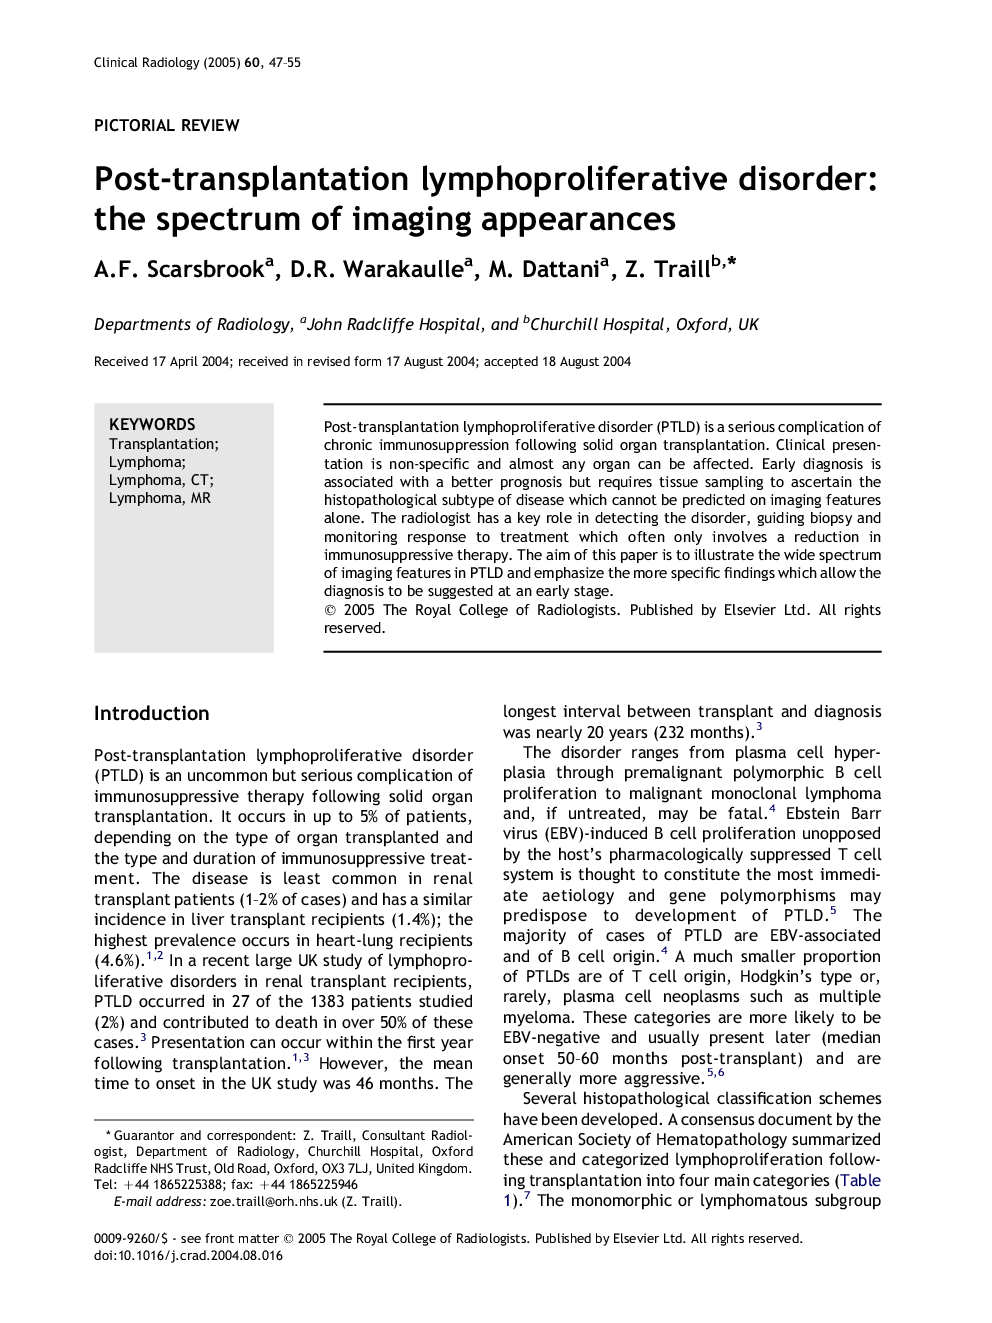 Post-transplantation lymphoproliferative disorder: the spectrum of imaging appearances